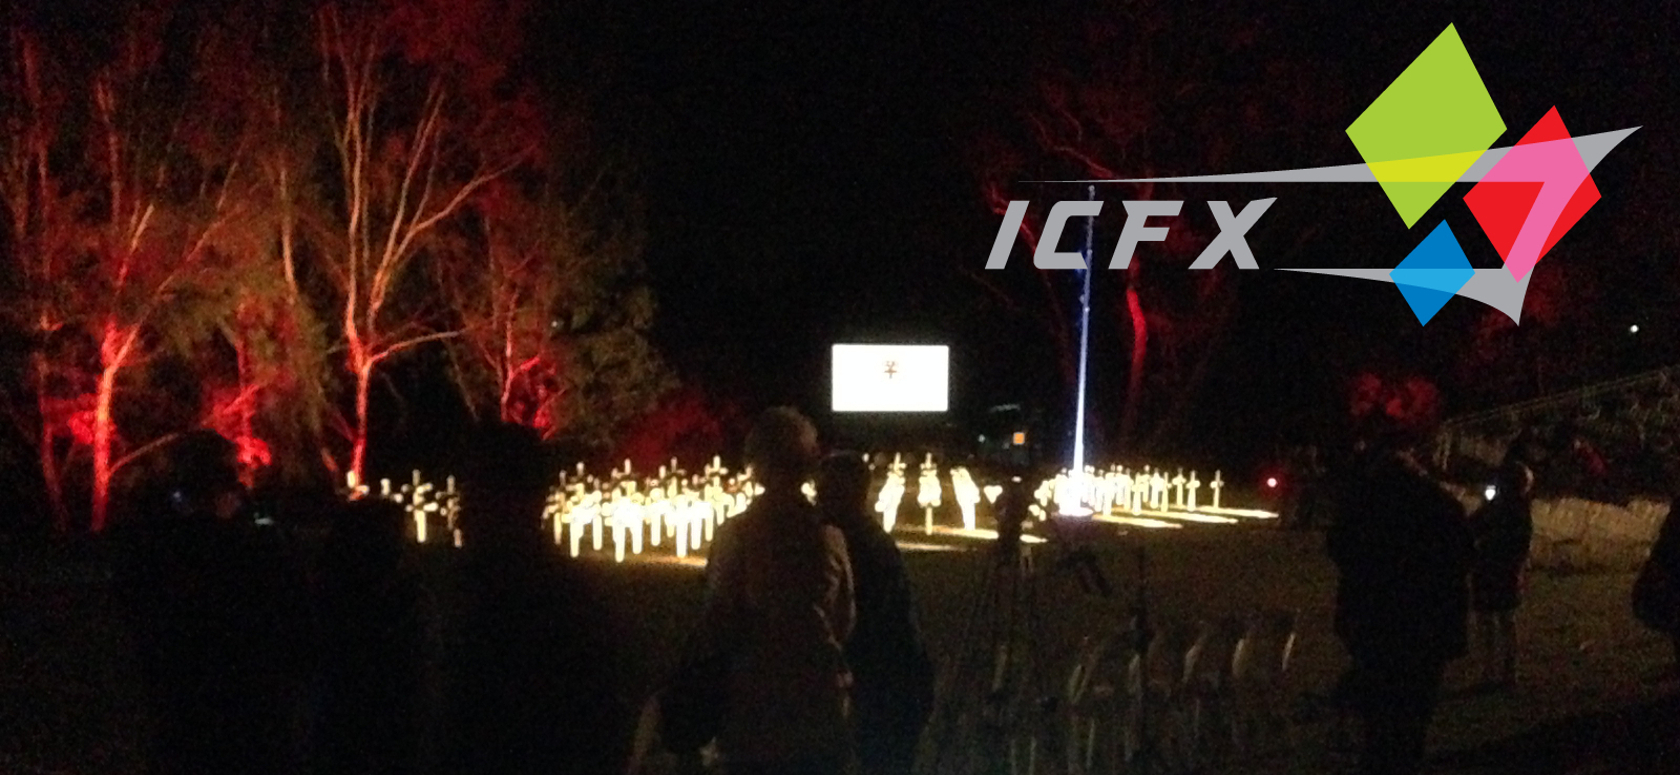 ICFX at a Nighttime Memorial Service